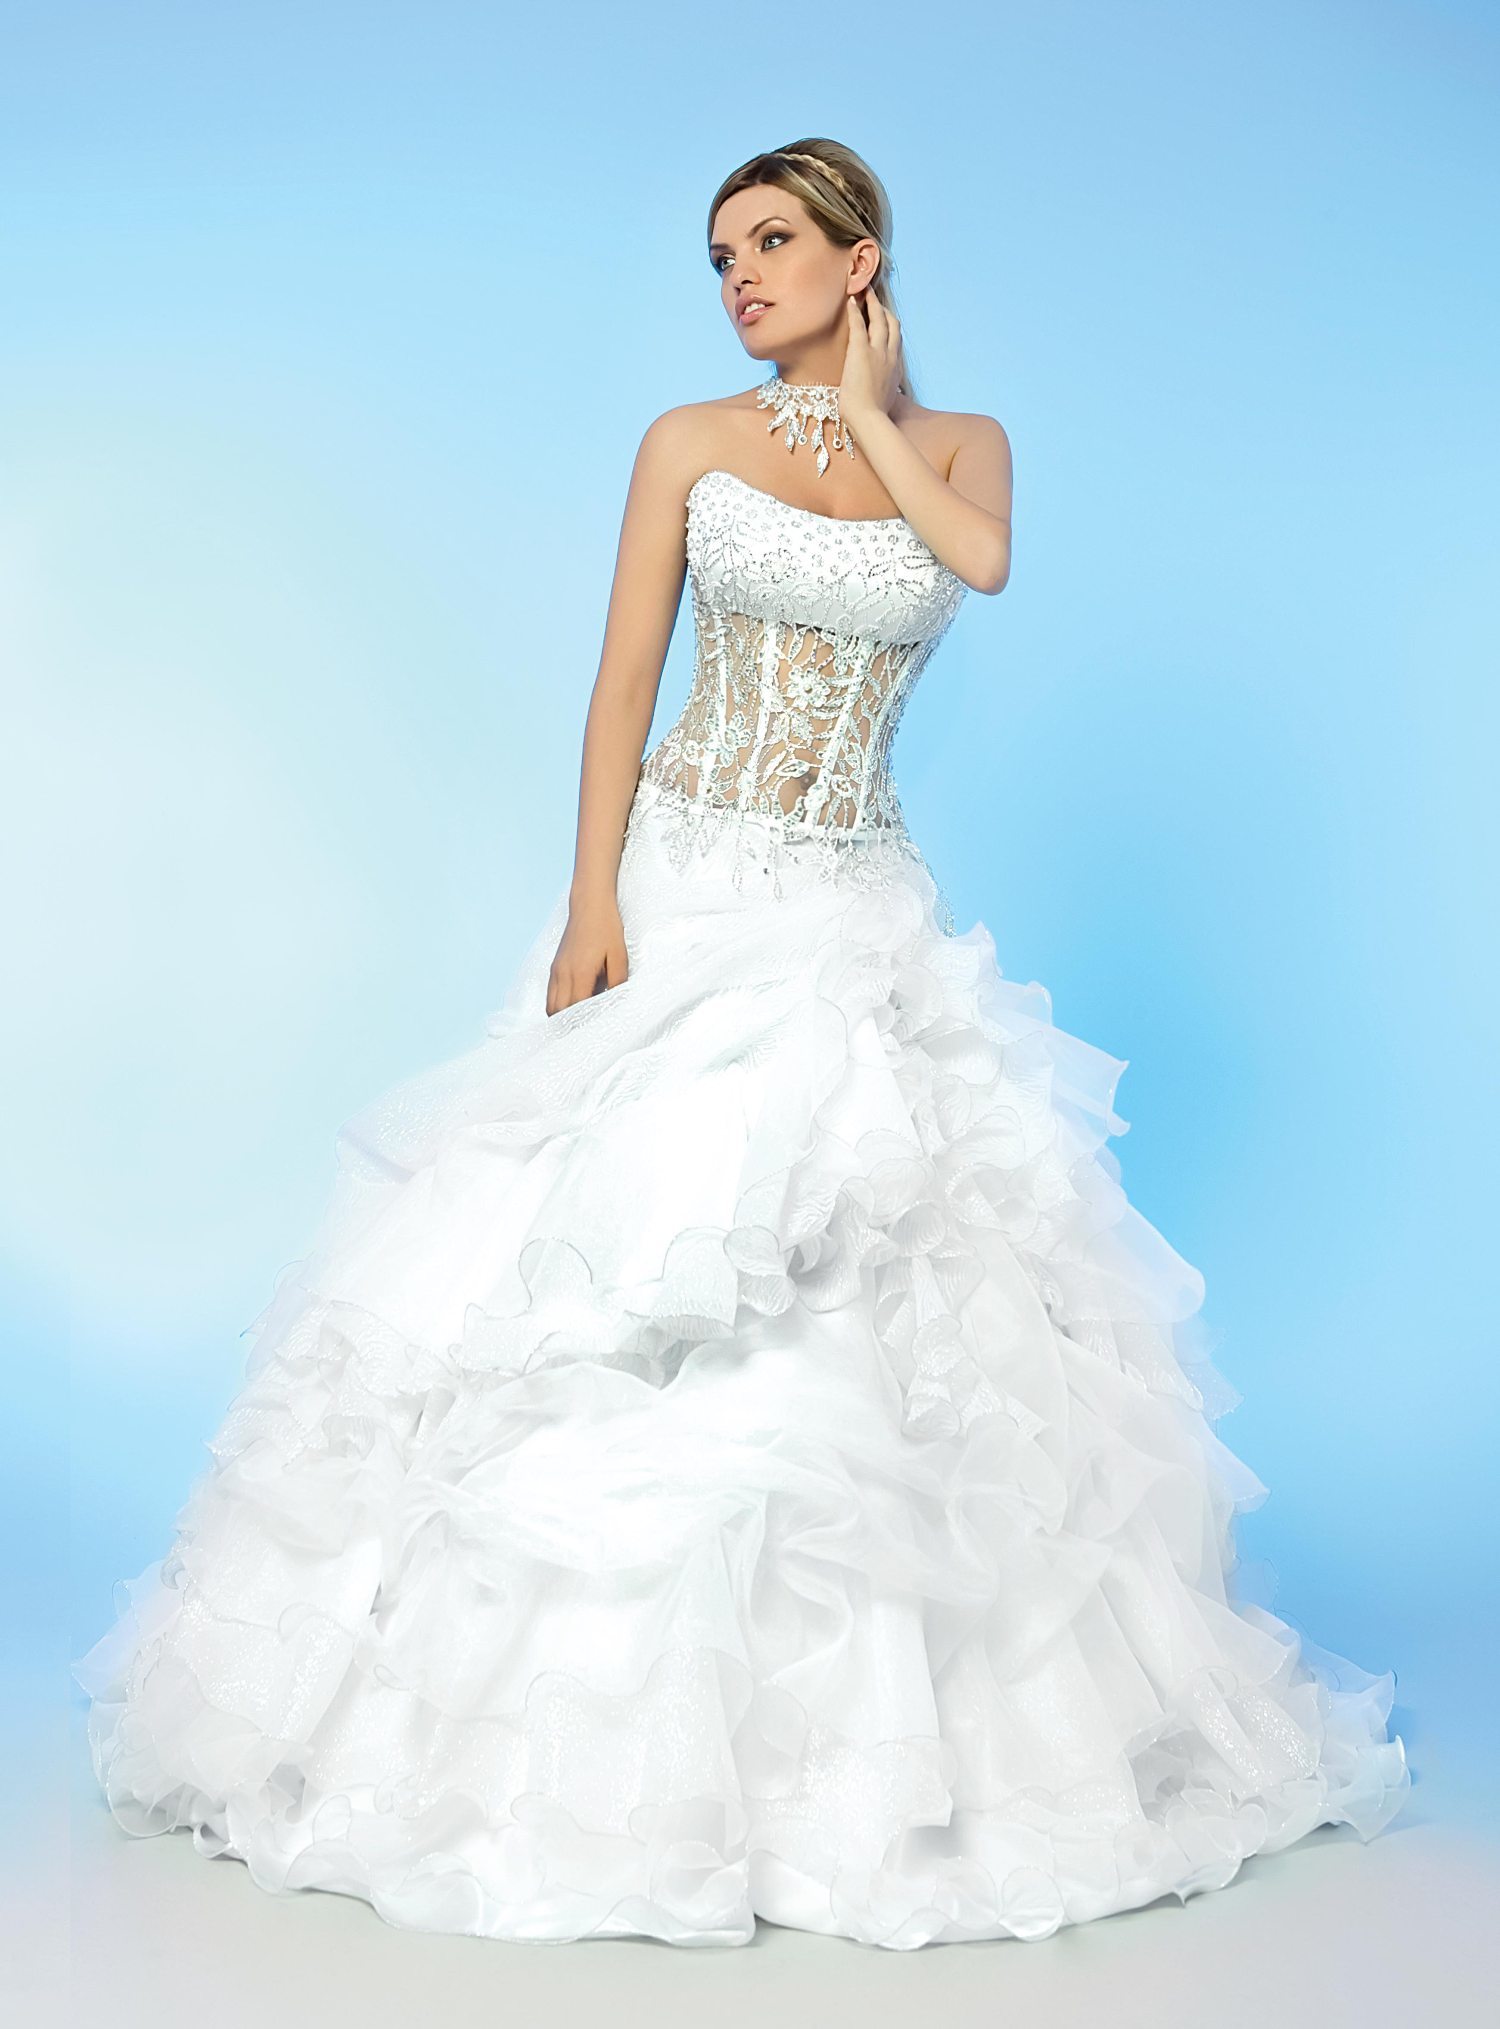 Wedding Dress - Lady Anatola - Lady Miki Skirt - Lady Anatola Necklace | MyLady Bridal Gown